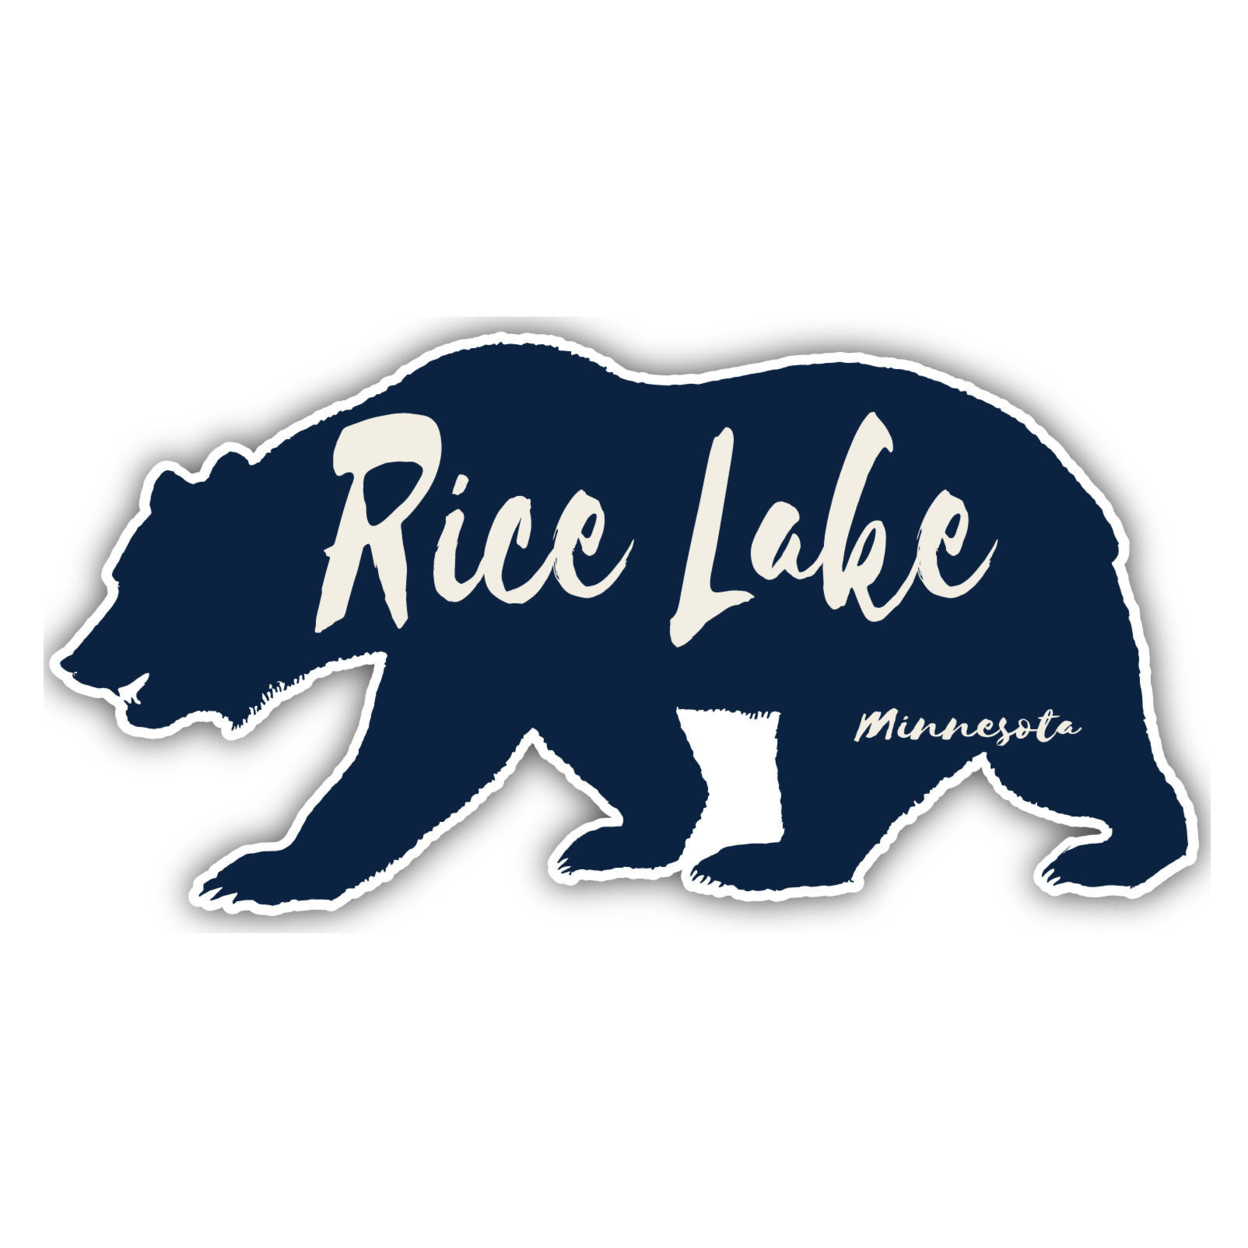 Rice Lake Minnesota Souvenir Decorative Stickers (Choose Theme And Size) - Single Unit, 2-Inch, Bear